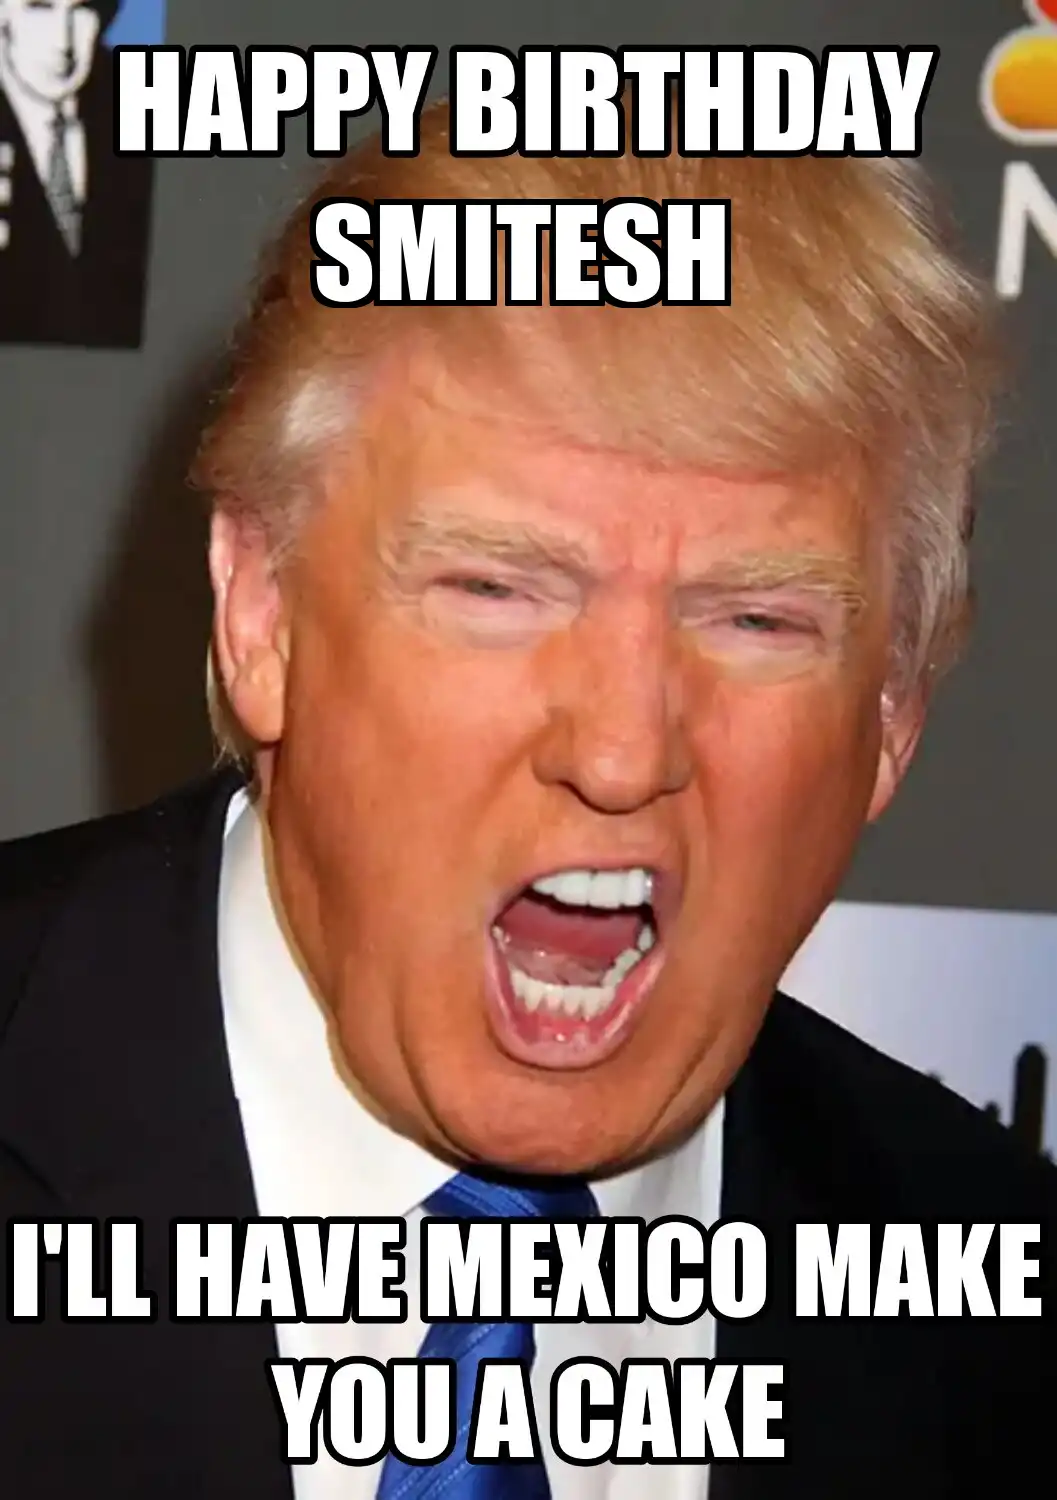 Happy Birthday Smitesh Mexico Make You A Cake Meme